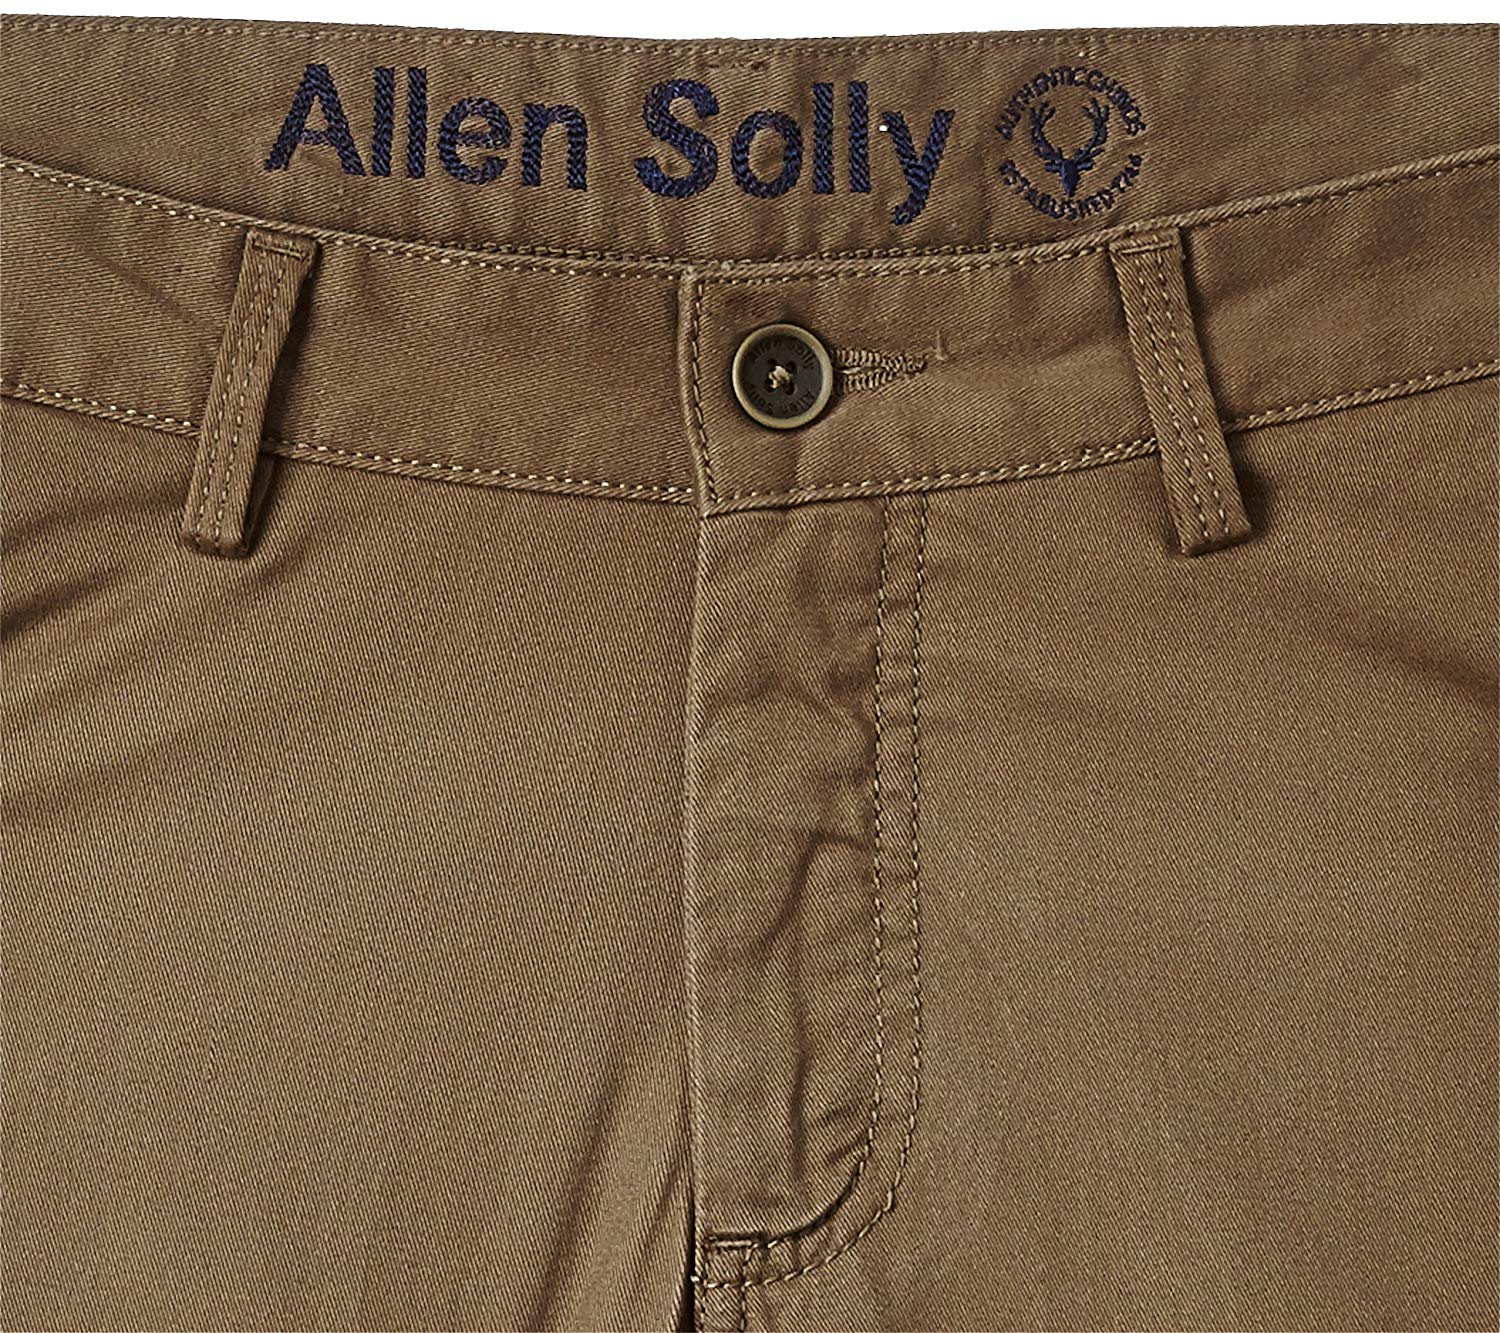 Allen Solly Woman Trousers - Buy Allen Solly Woman Trousers Online in India